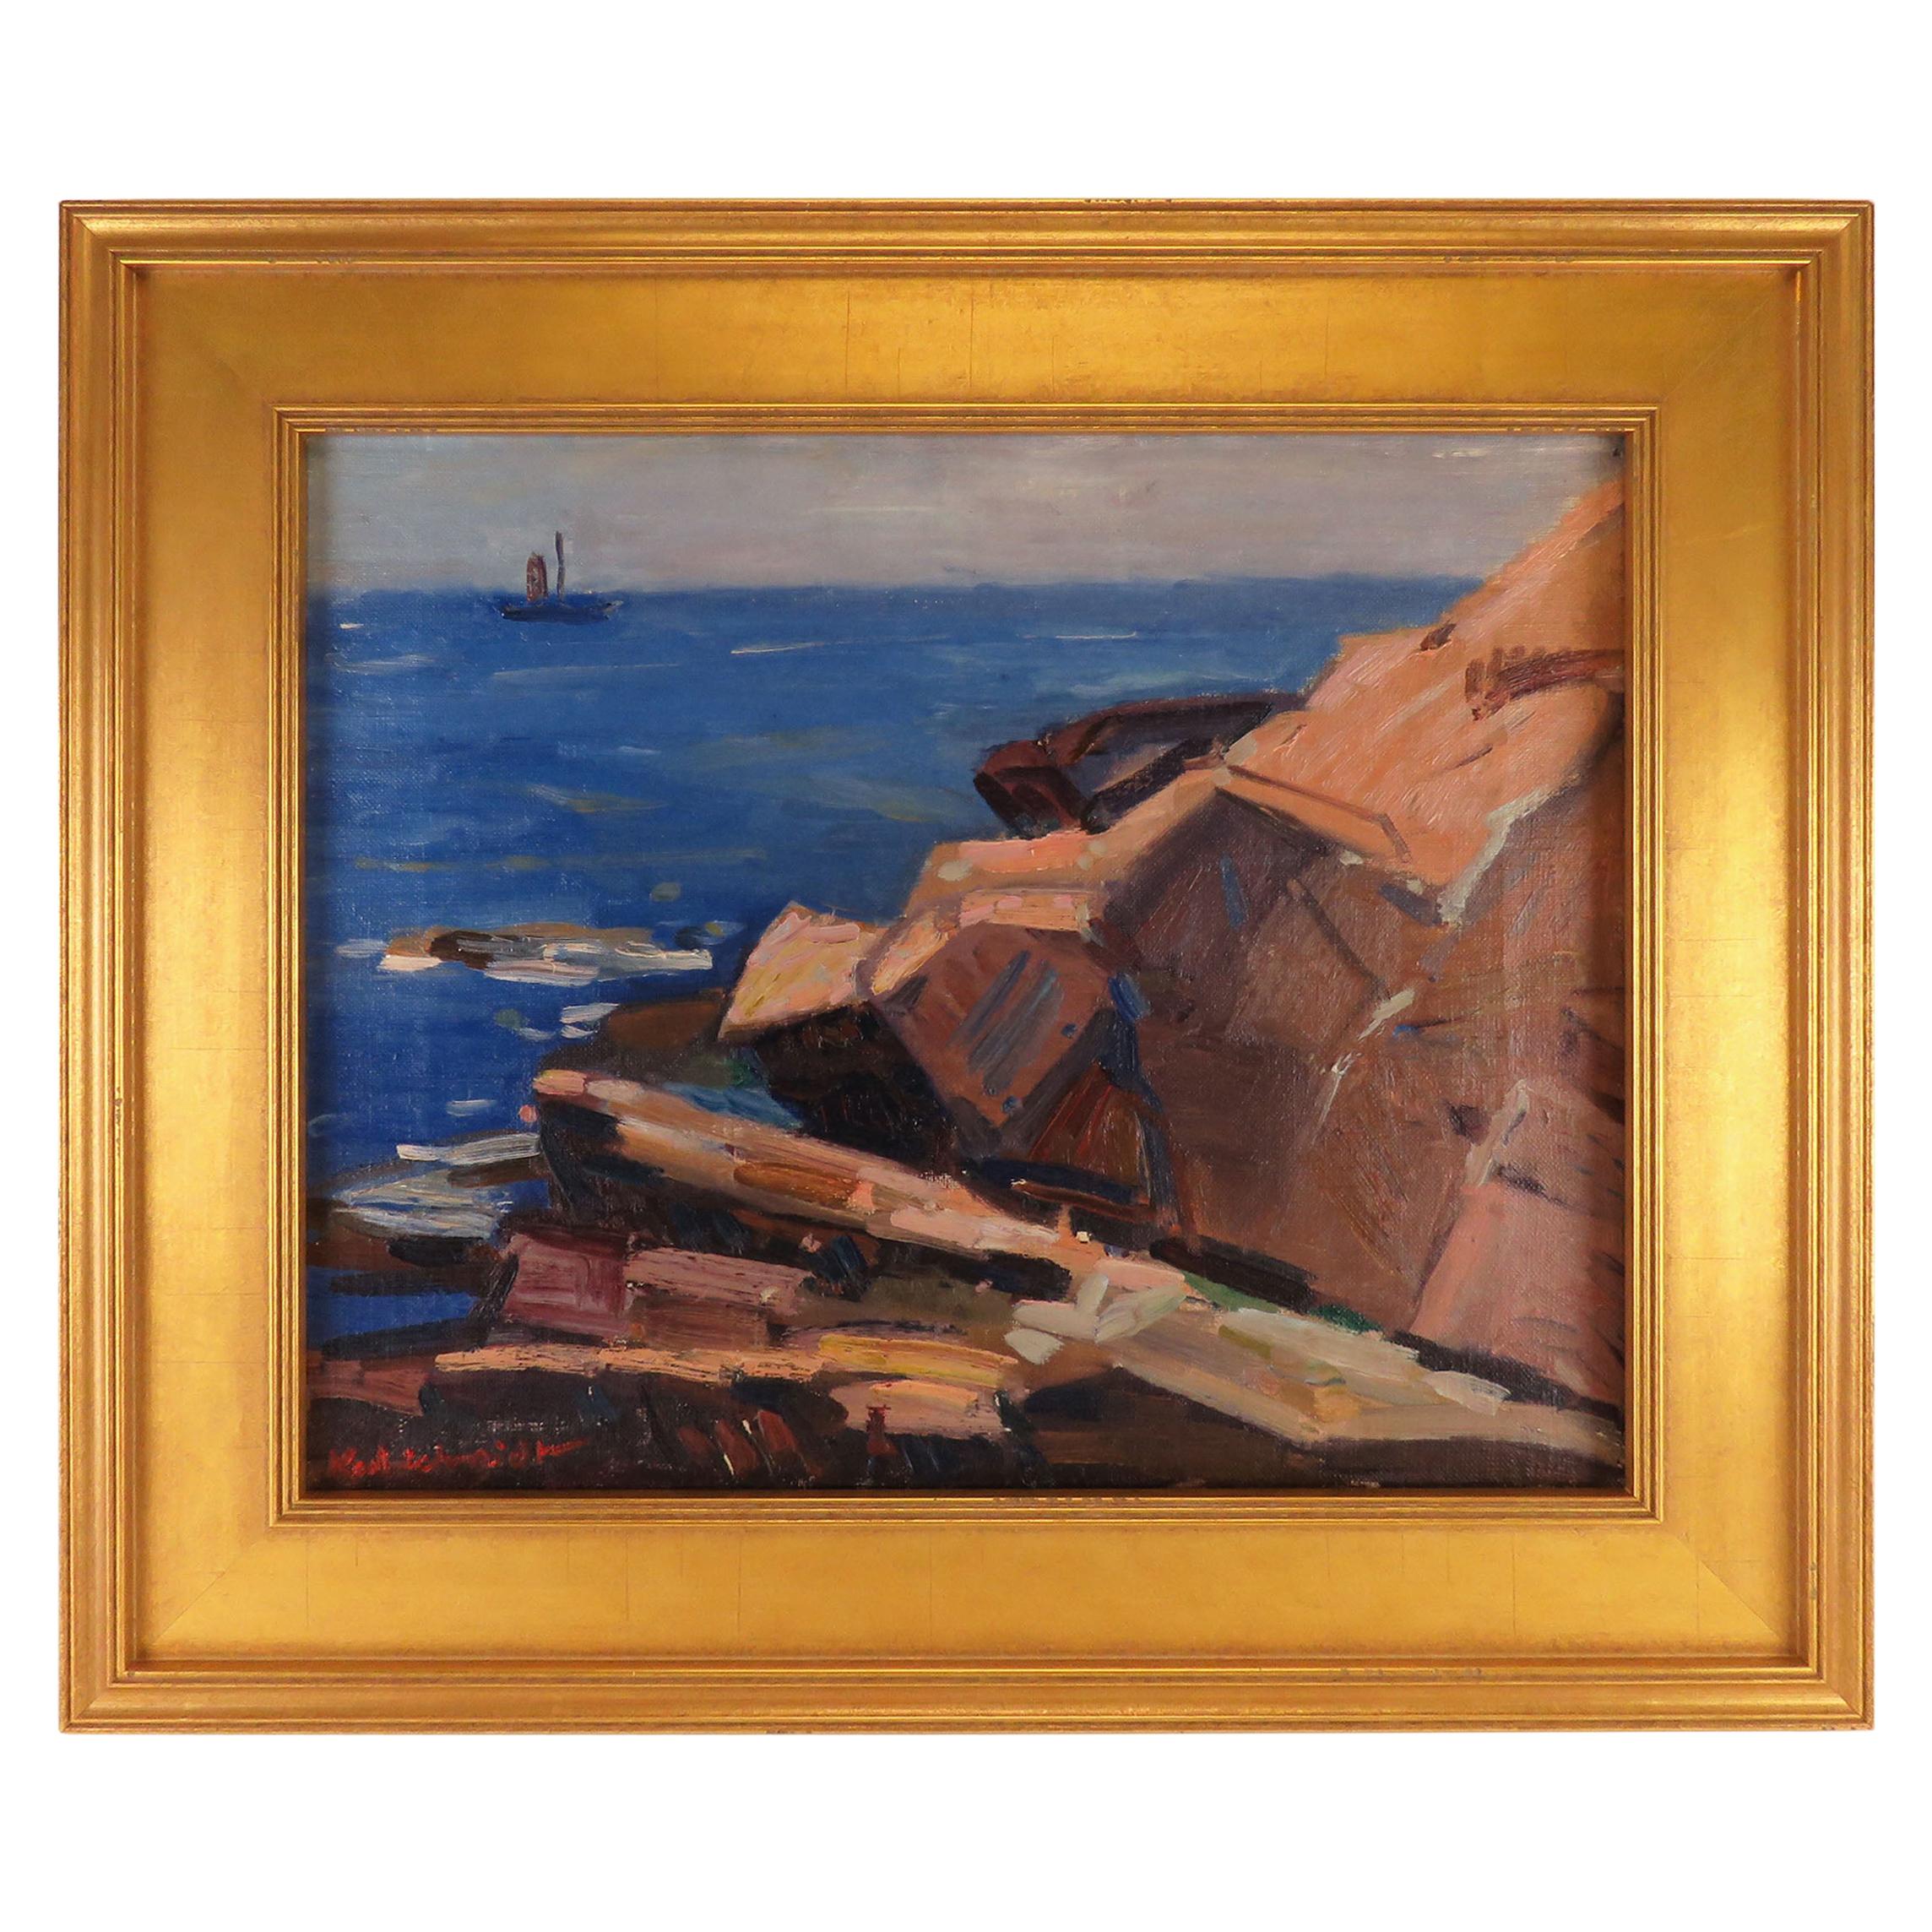 Modernist Seascape Oil Painting Titled "Monhegan" by Karl Schmidt, Dated 1955